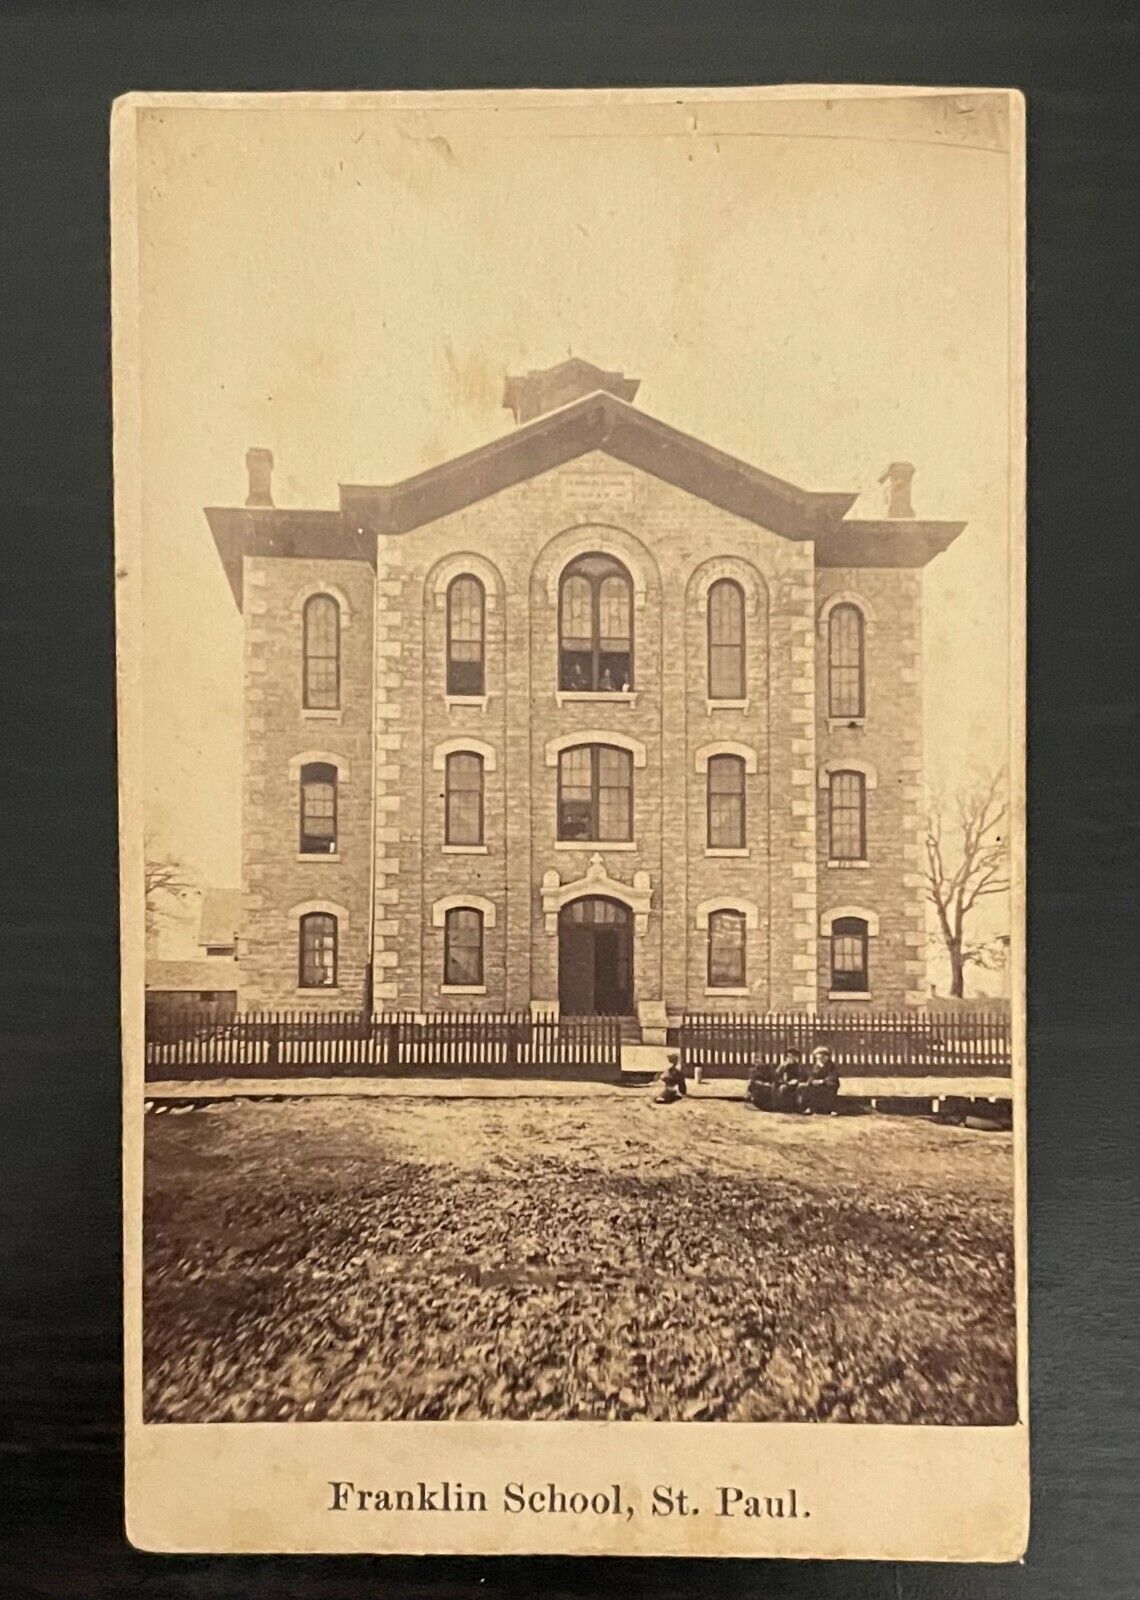 FRANKLIN SCHOOL - ST. PAUL, MINNESOTA - ORIGINAL 1860s CDV PHOTO by R. W. RANSOM